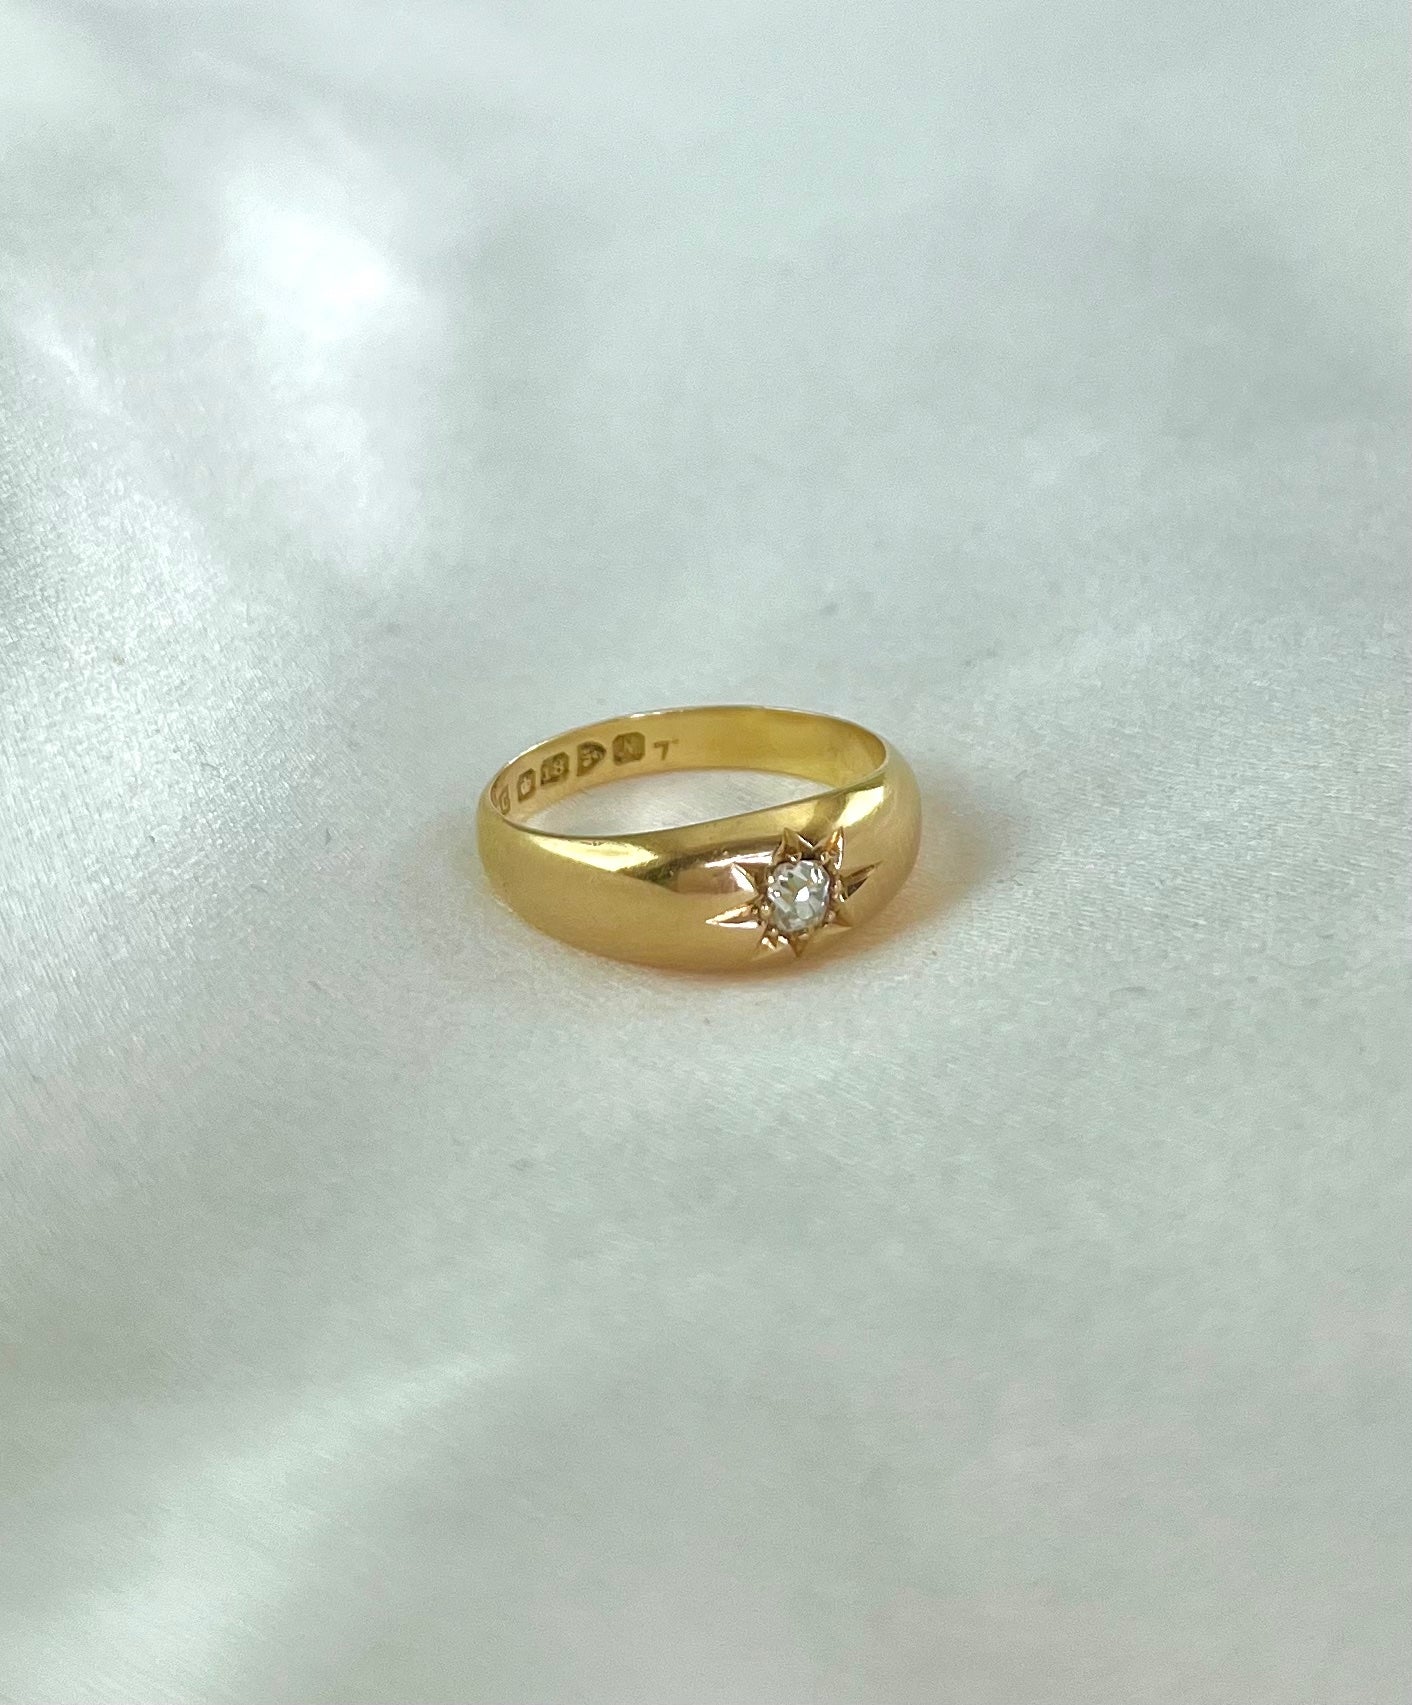 Antique Edwardian 18ct Gold Old Cut Diamond Gypsy Ring, 1913, Size N + 0.5. 18K